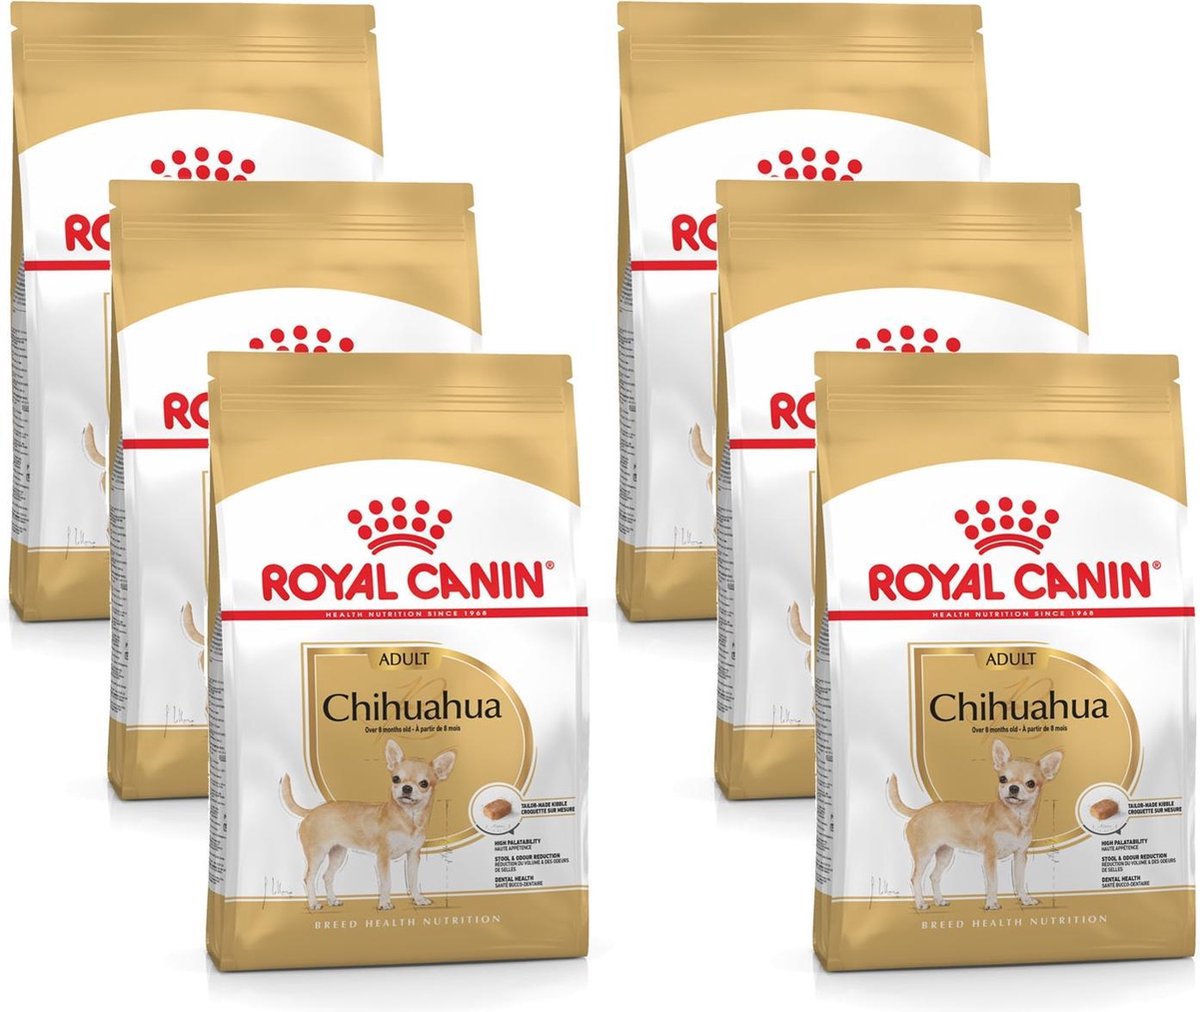 Royal Canin Bhn Chihuahua Adult - Hondenvoer - 6 x 1.5 kg - Royal Canin